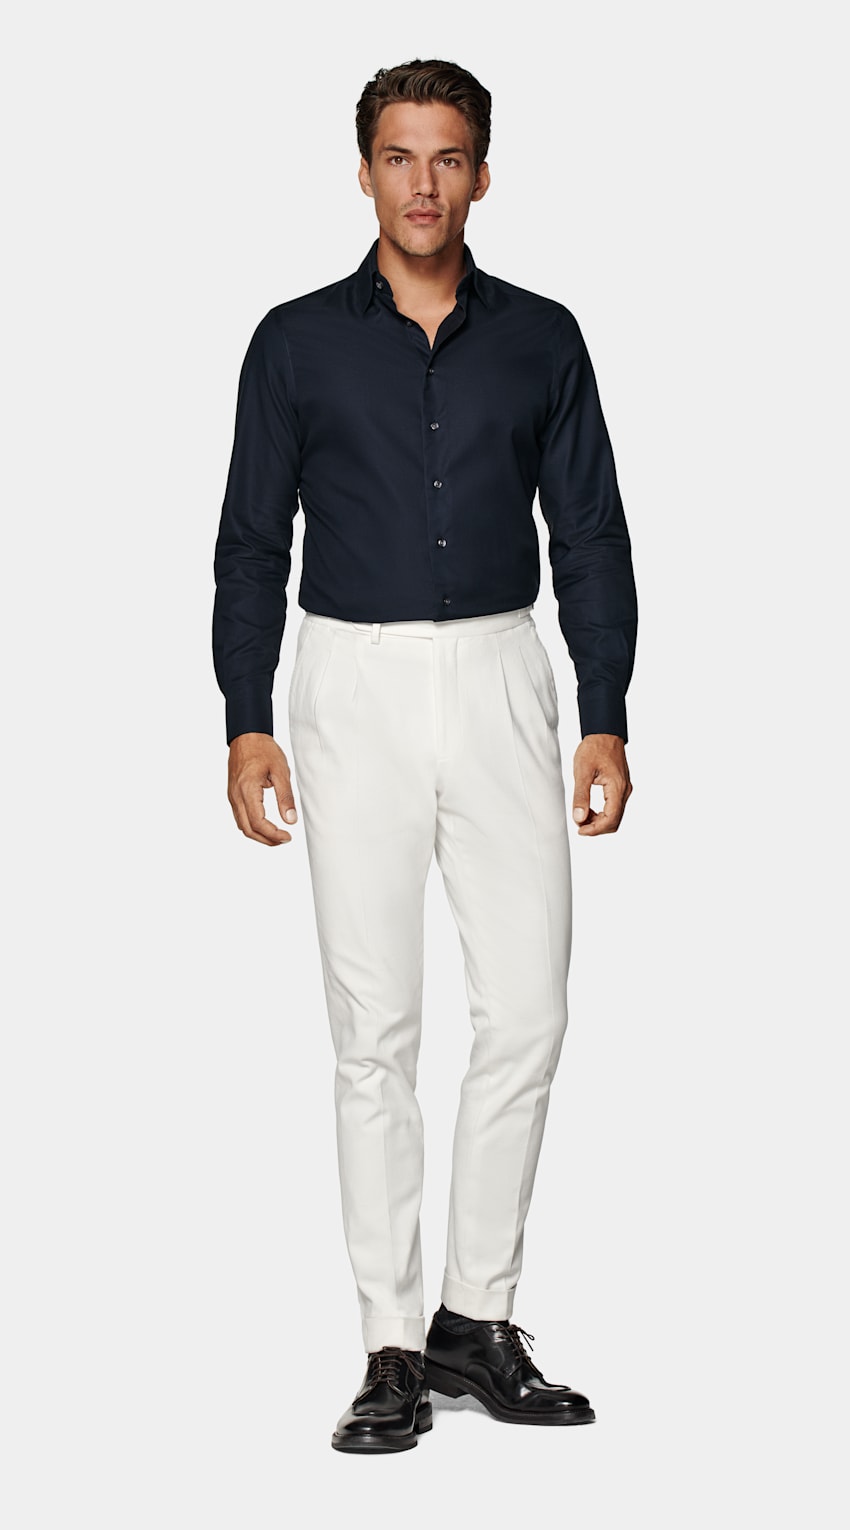 SUITSUPPLY Puro algodón Traveller Camisa Royal Oxford corte Slim azul marino